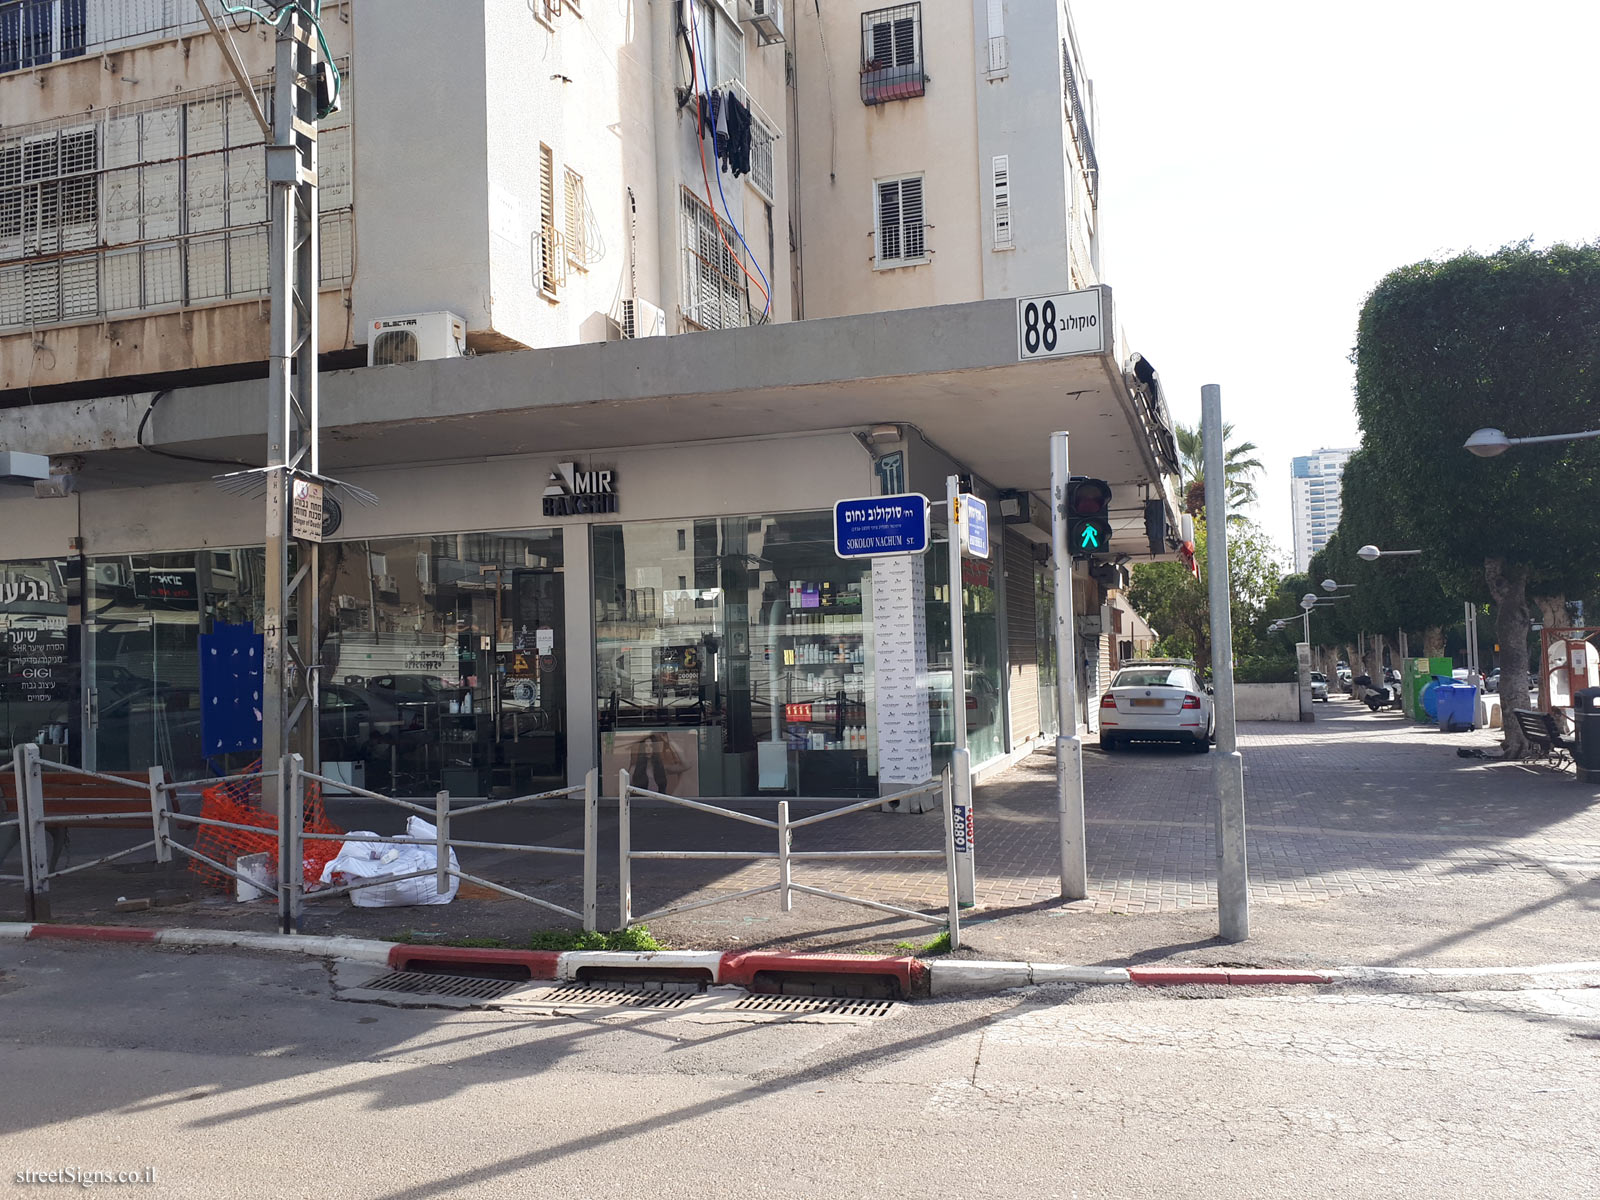 Heritage Sites in Israel - Savoy cafe - Sokolov St 88, Holon, Israel